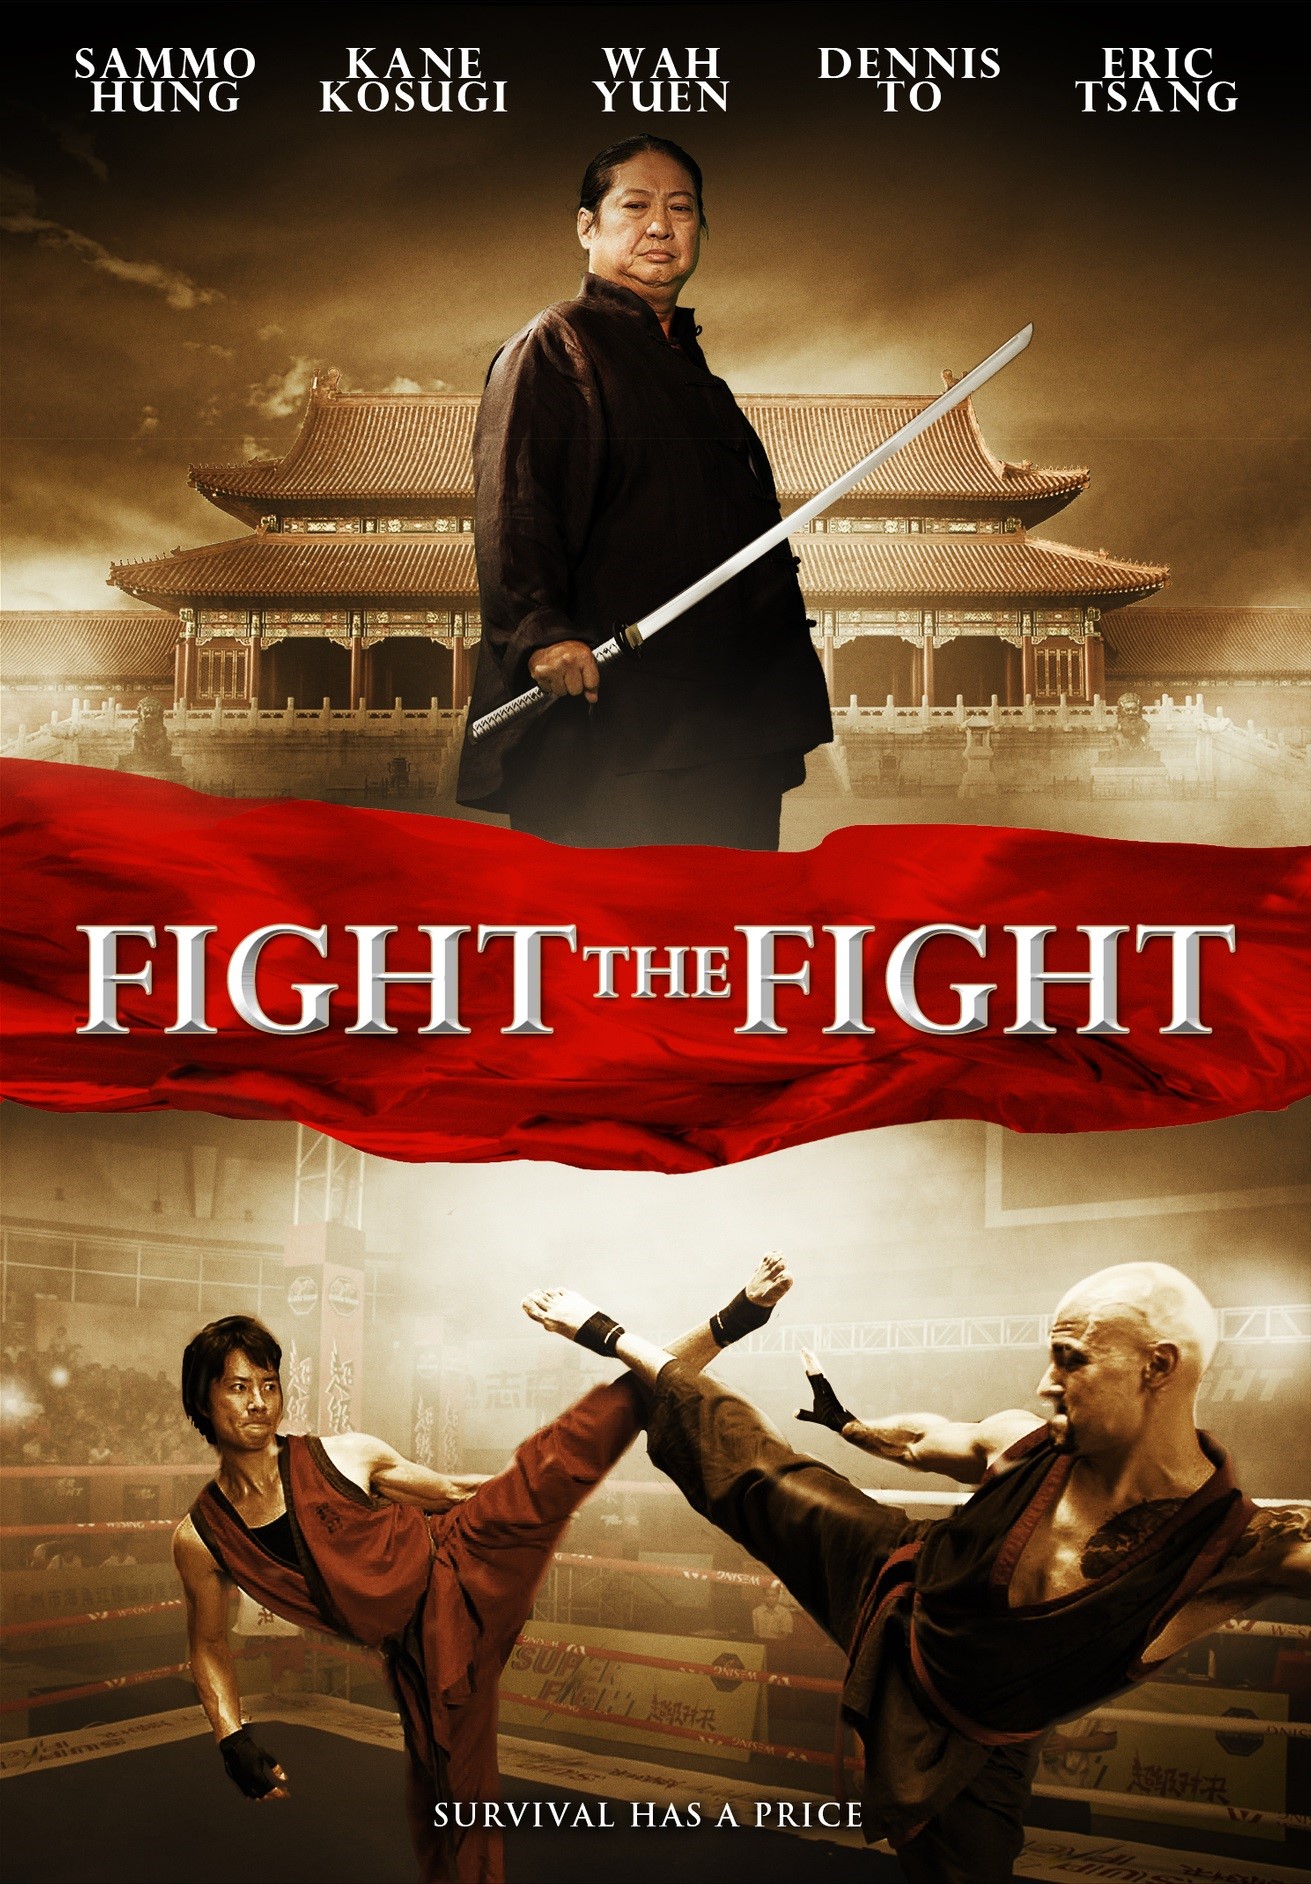 FIGHT THE FIGHT (Cai li fu)